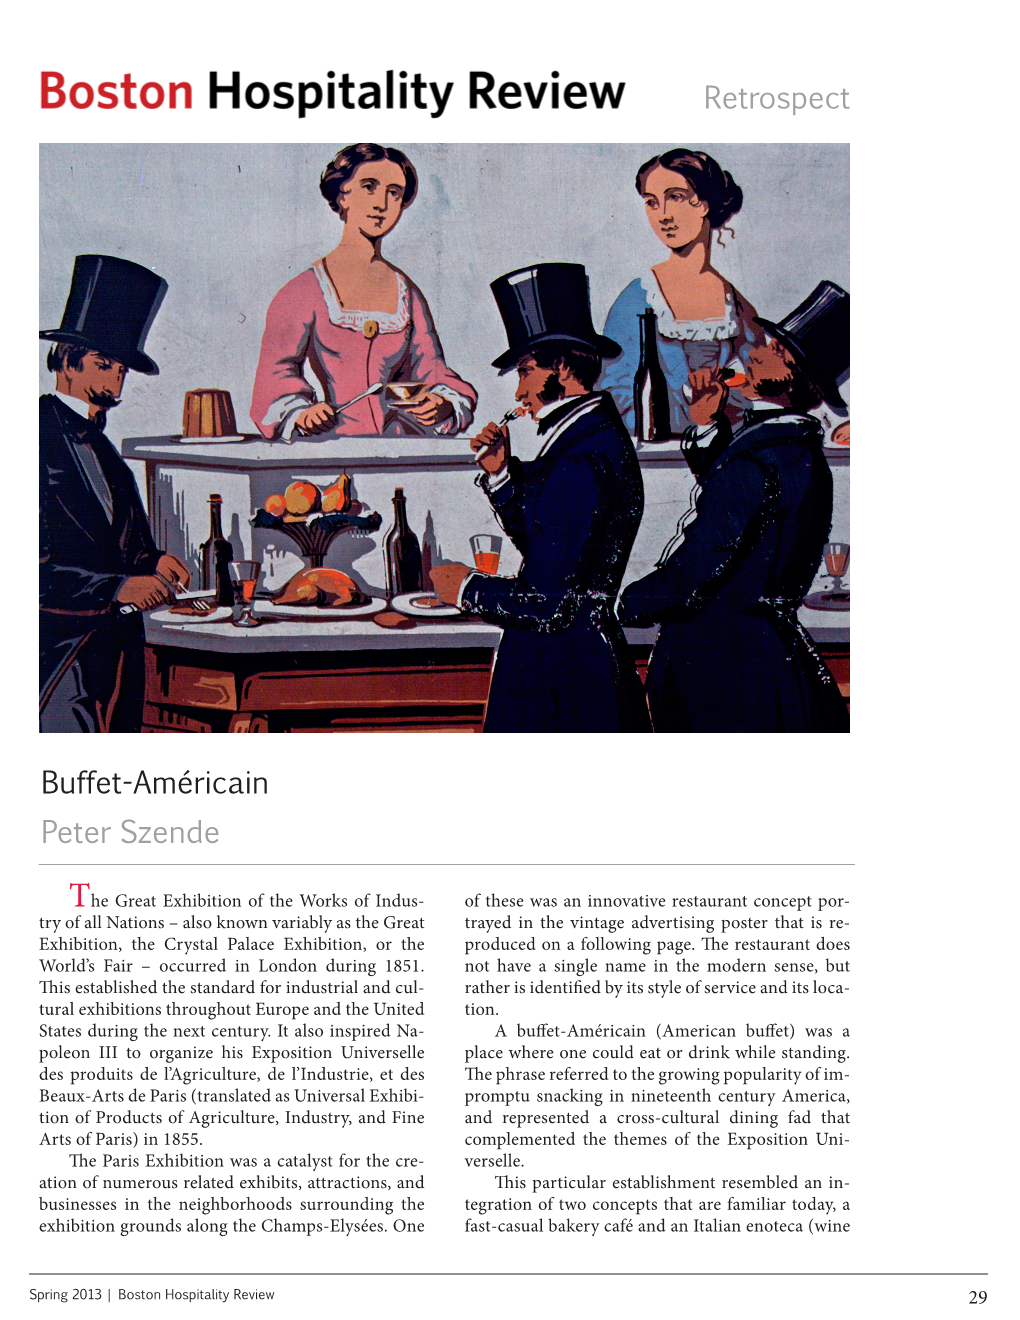 Buffet-Americain